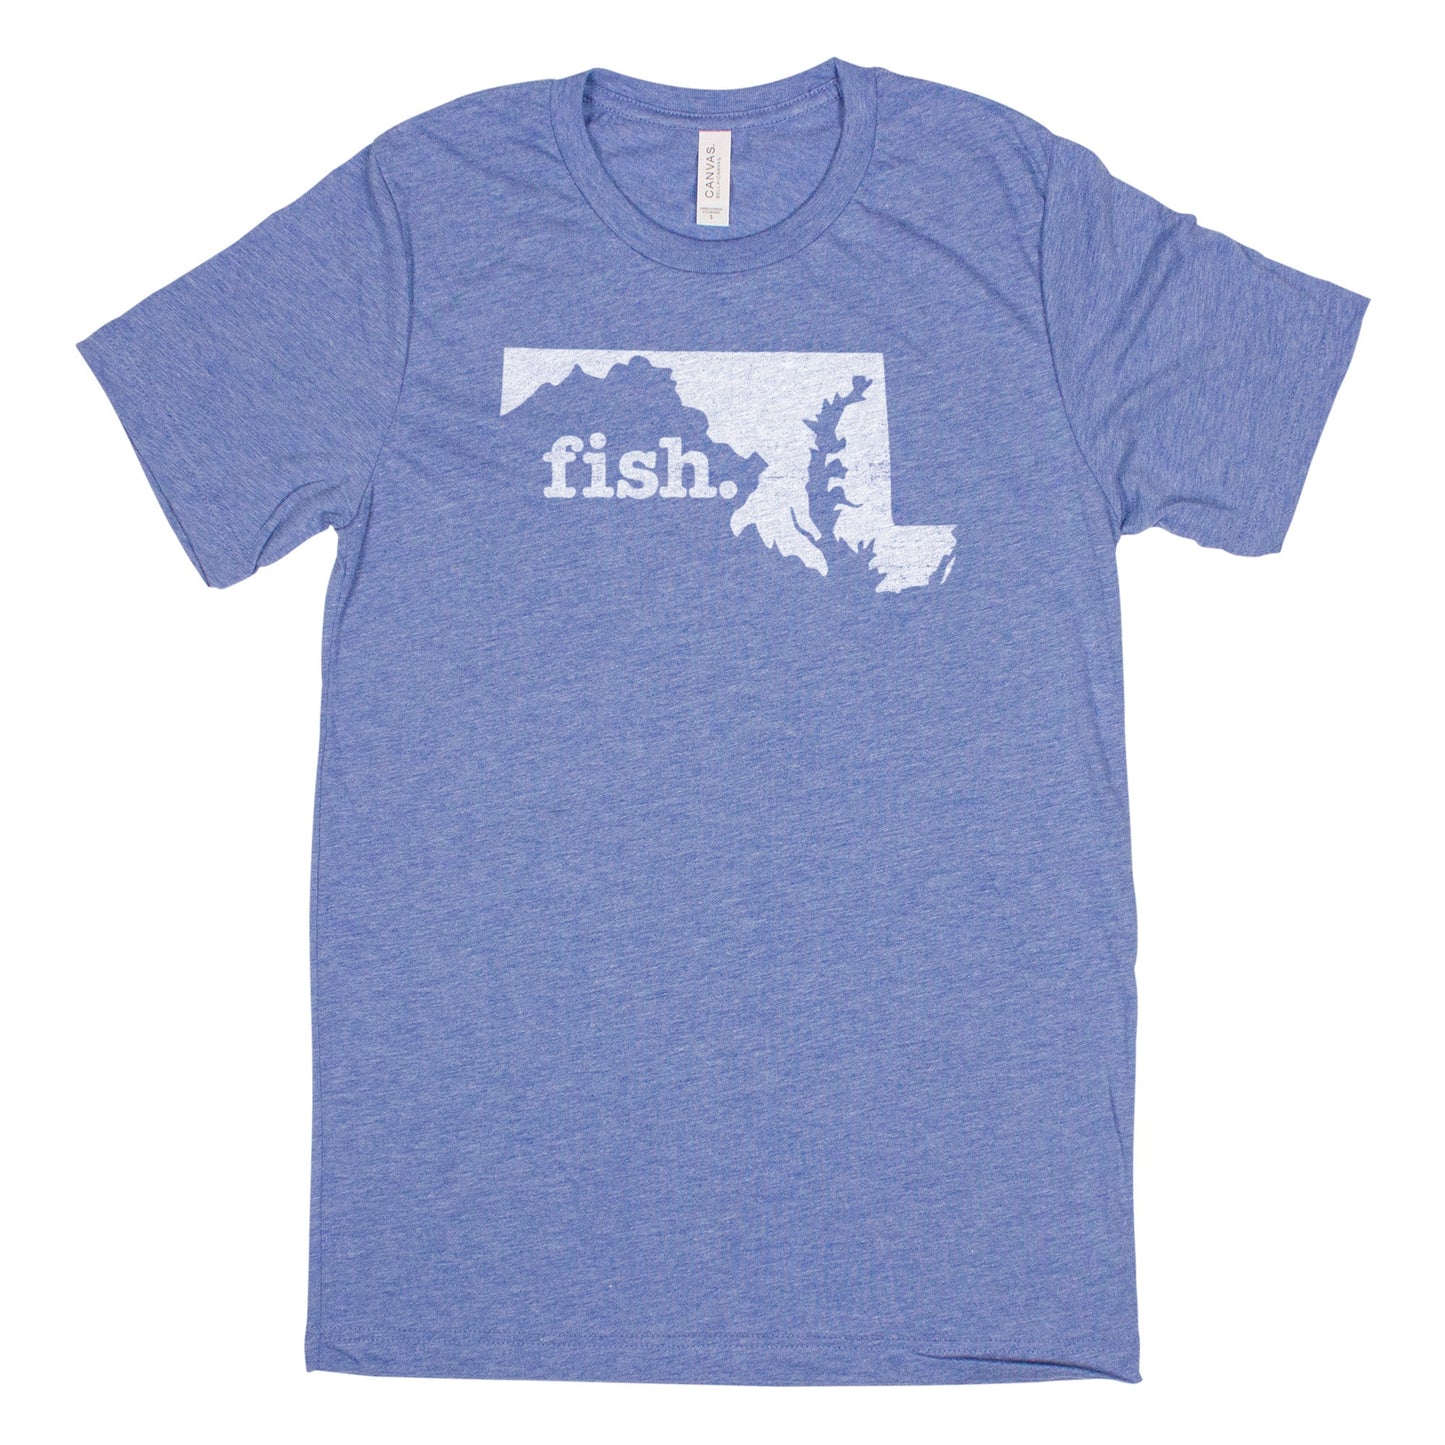 fish. Men's Unisex T-Shirt - Maryland